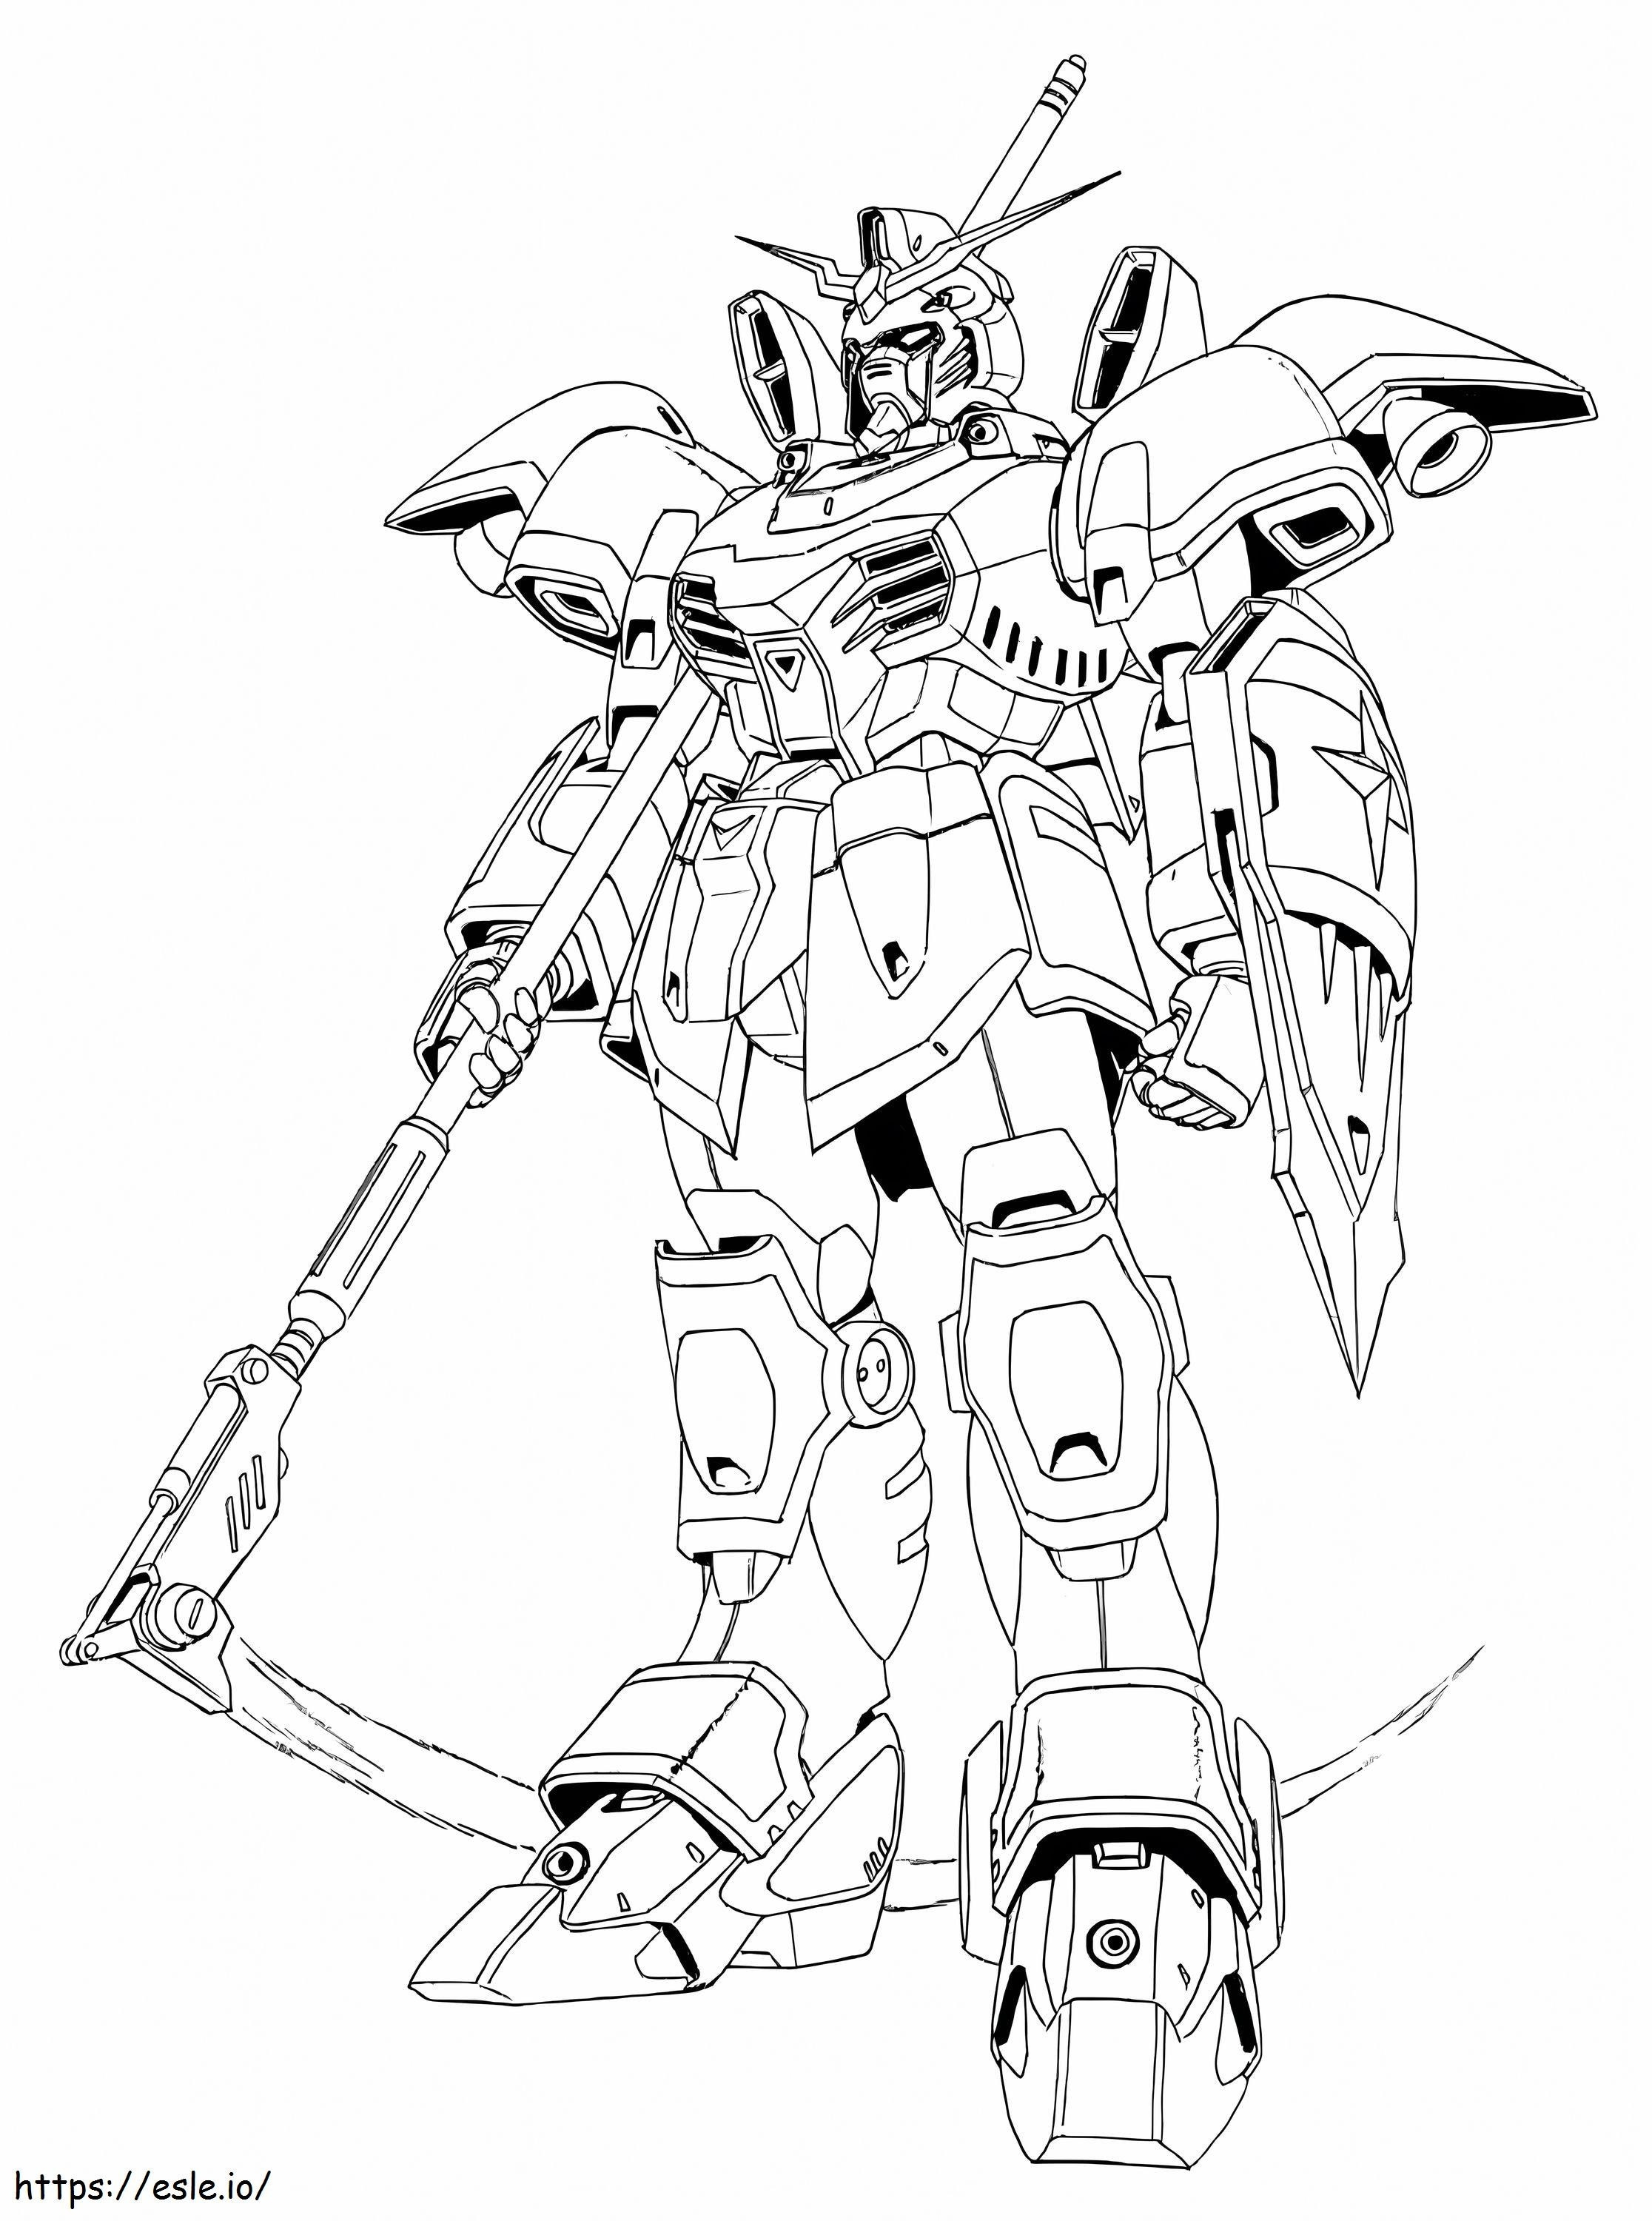 Toller Gundam ausmalbilder